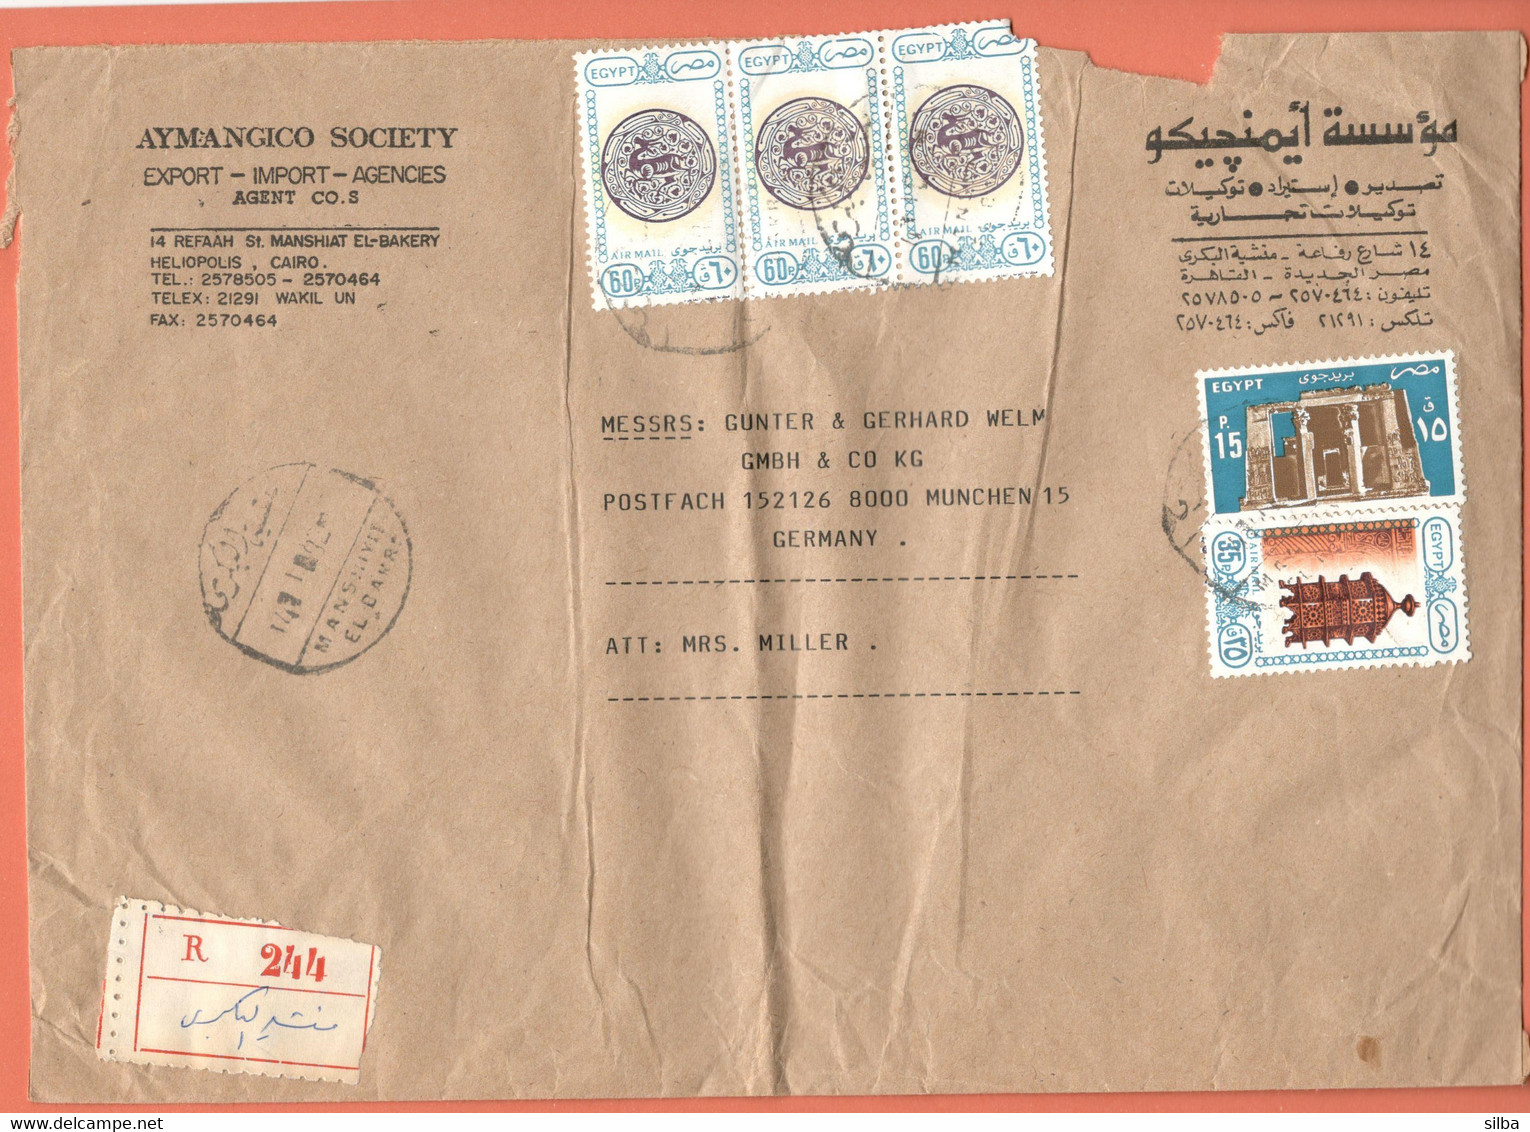 Egypt / Airmail - Art And Mosques, Lantern 35 P, Dish With Gazelle Motif - 60 P, 1989, Edfu Temple, 15 P, 1985 - Lettres & Documents